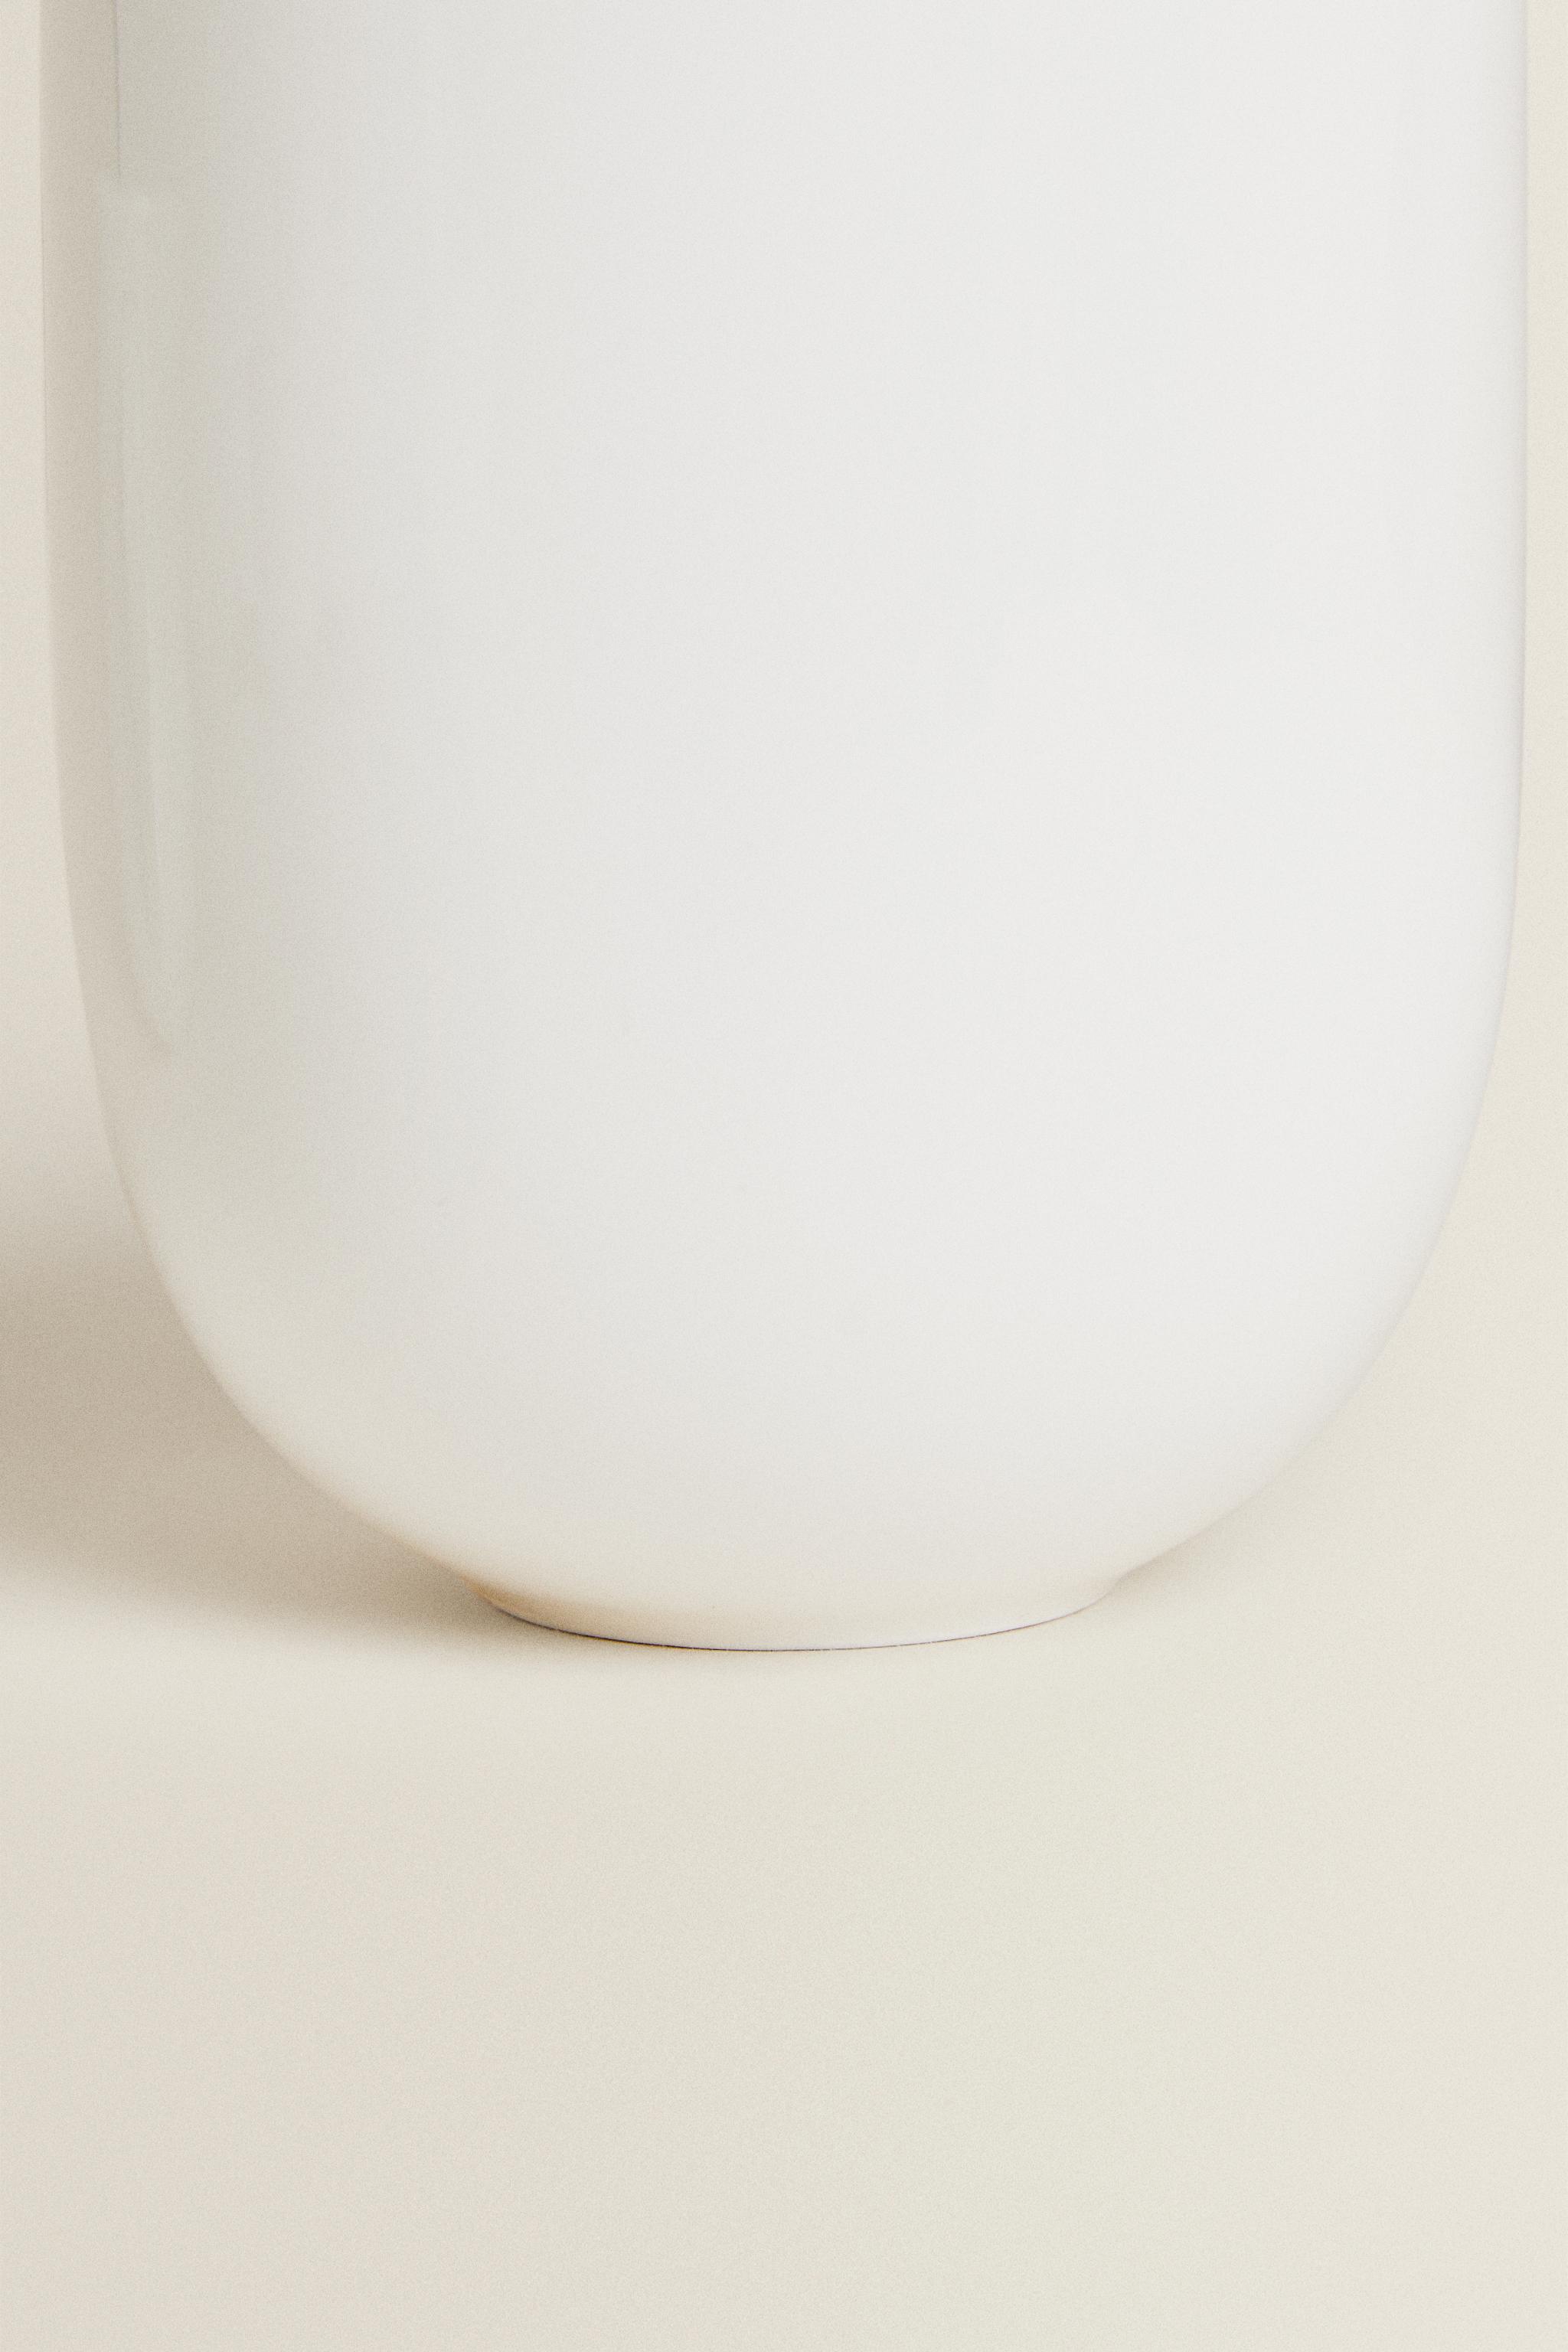 Taza zaara fucsia, porcelana 0,35 l filtro y tapa: 17,50 €